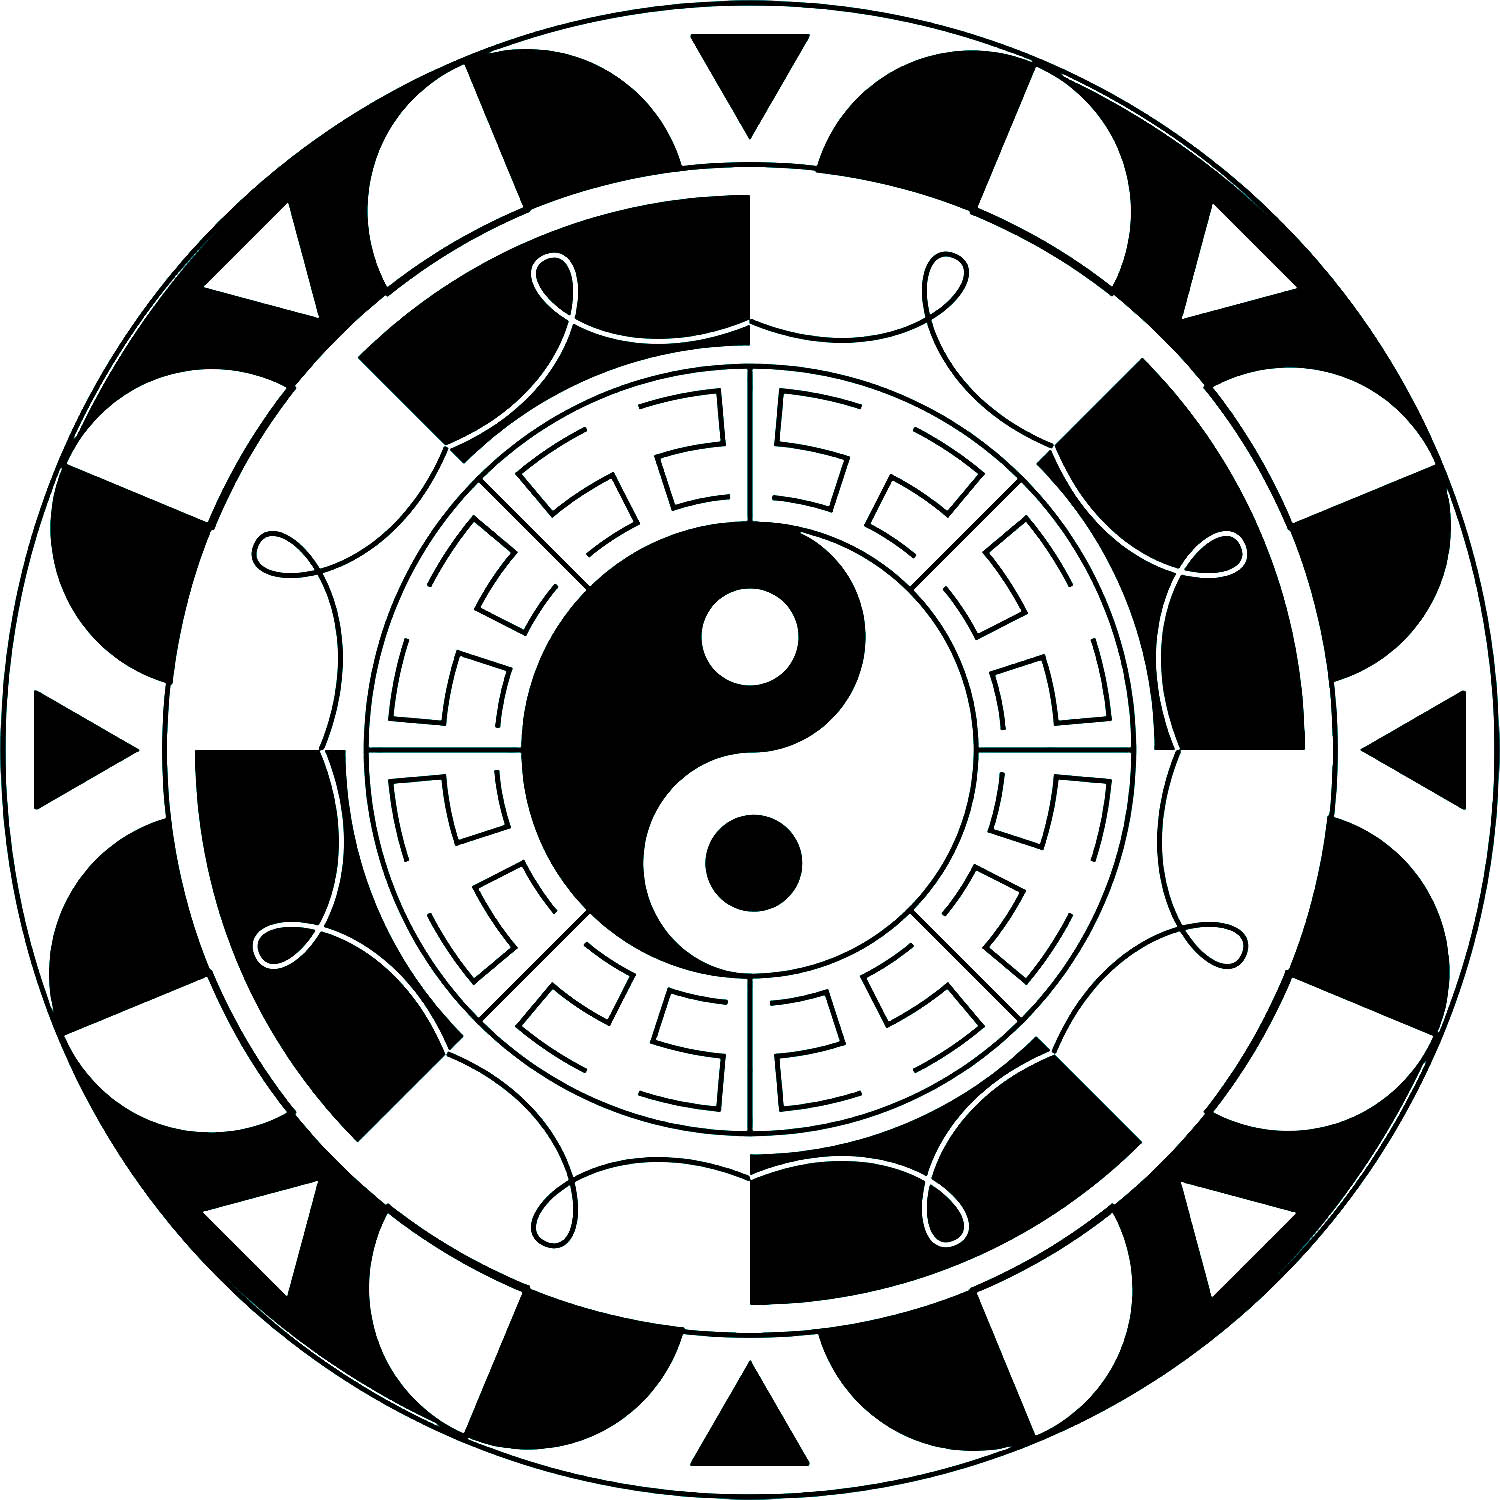 Simple Mandala with Yin & Yang symbol - Mandalas Adult Coloring Pages